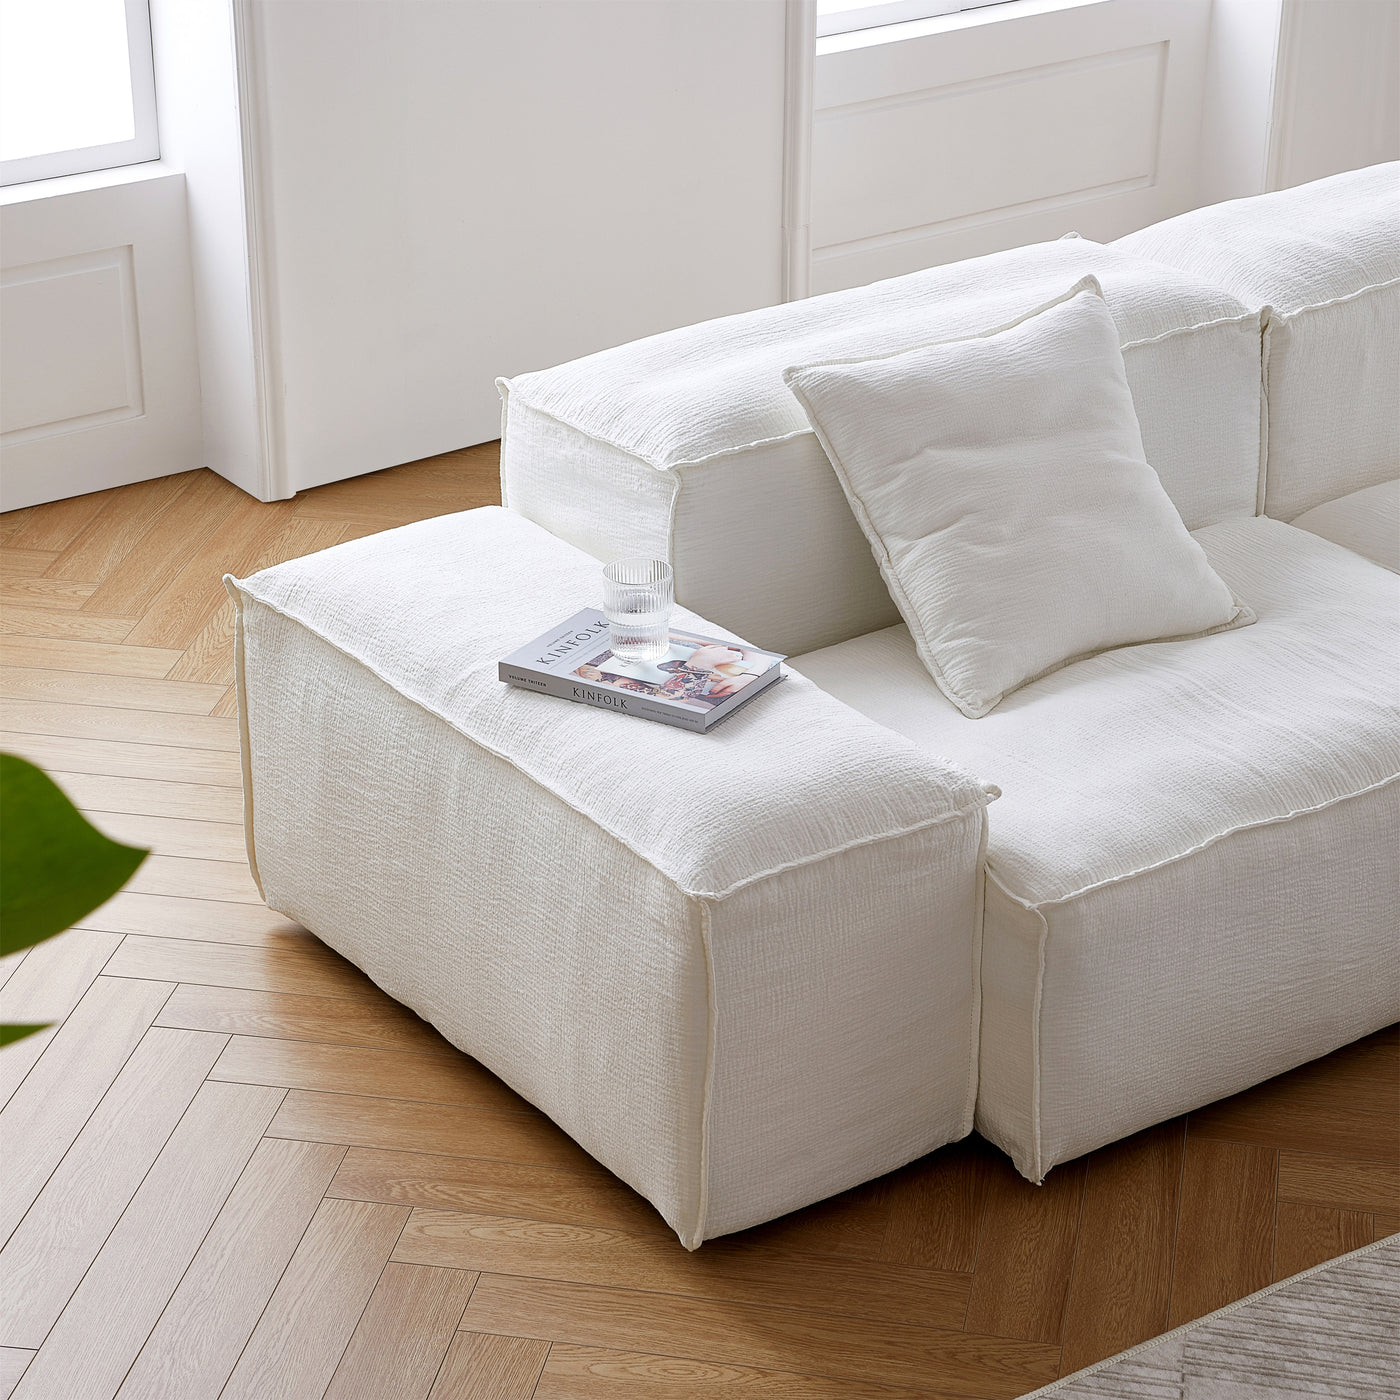 Freedom Modular White Double Sided Sectional Sofa-White